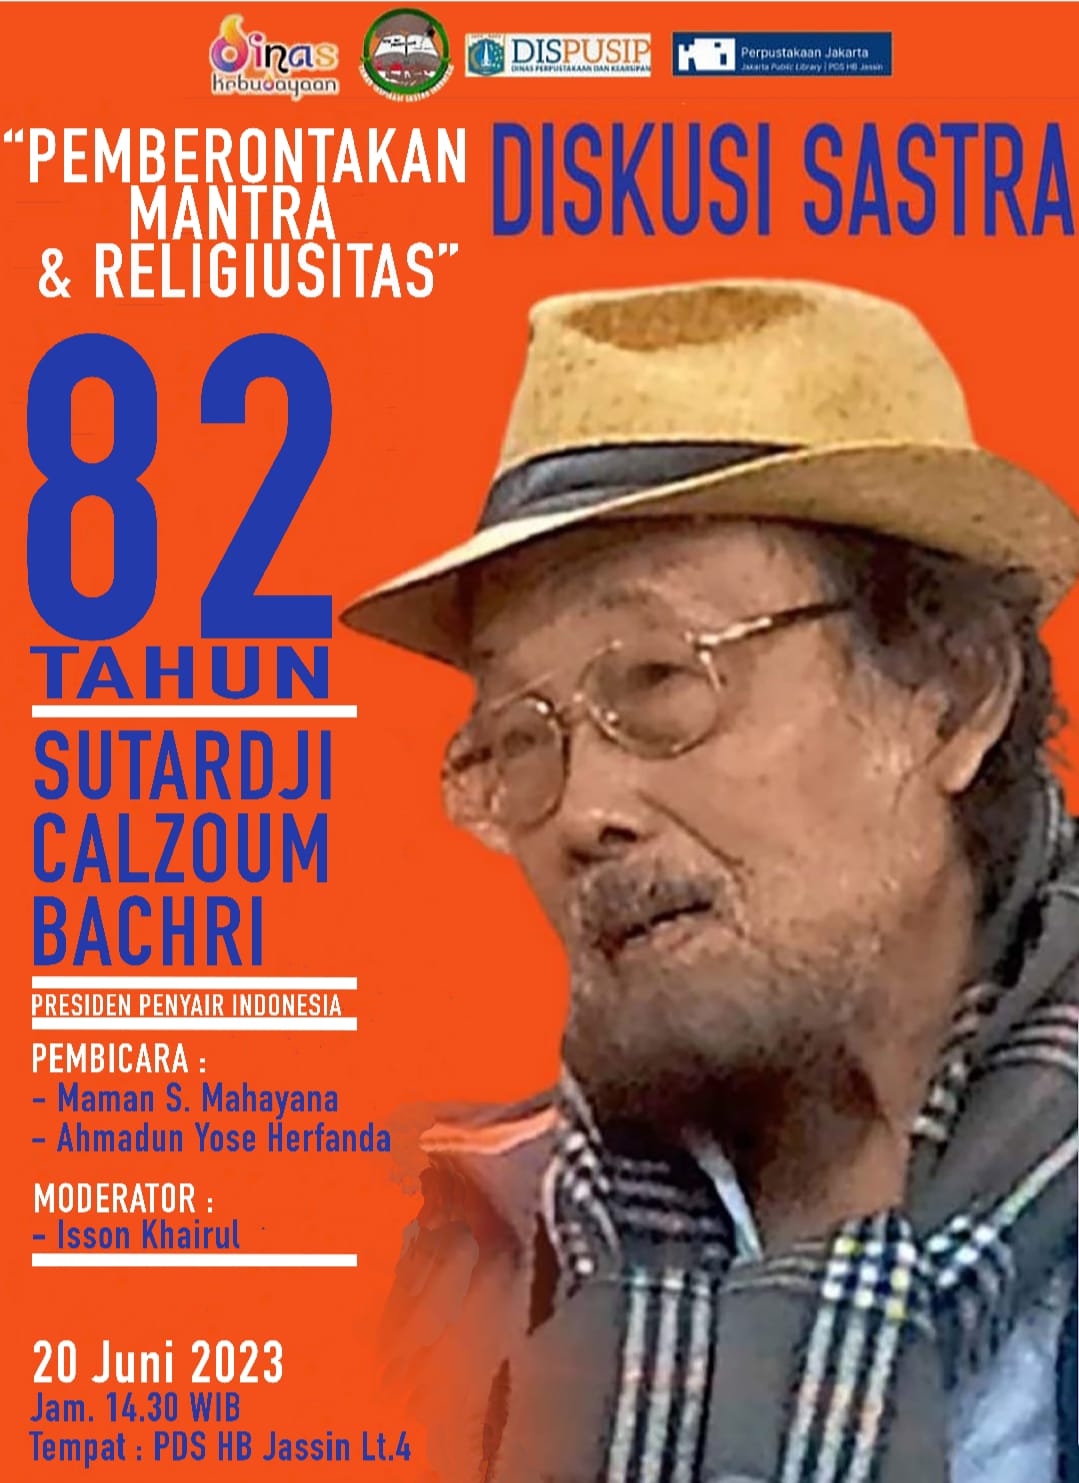 Diskusi Sastra "Pemberontakan Mantra & Religiusitas" 82 Tahun Sutardji Calzoum Bachri